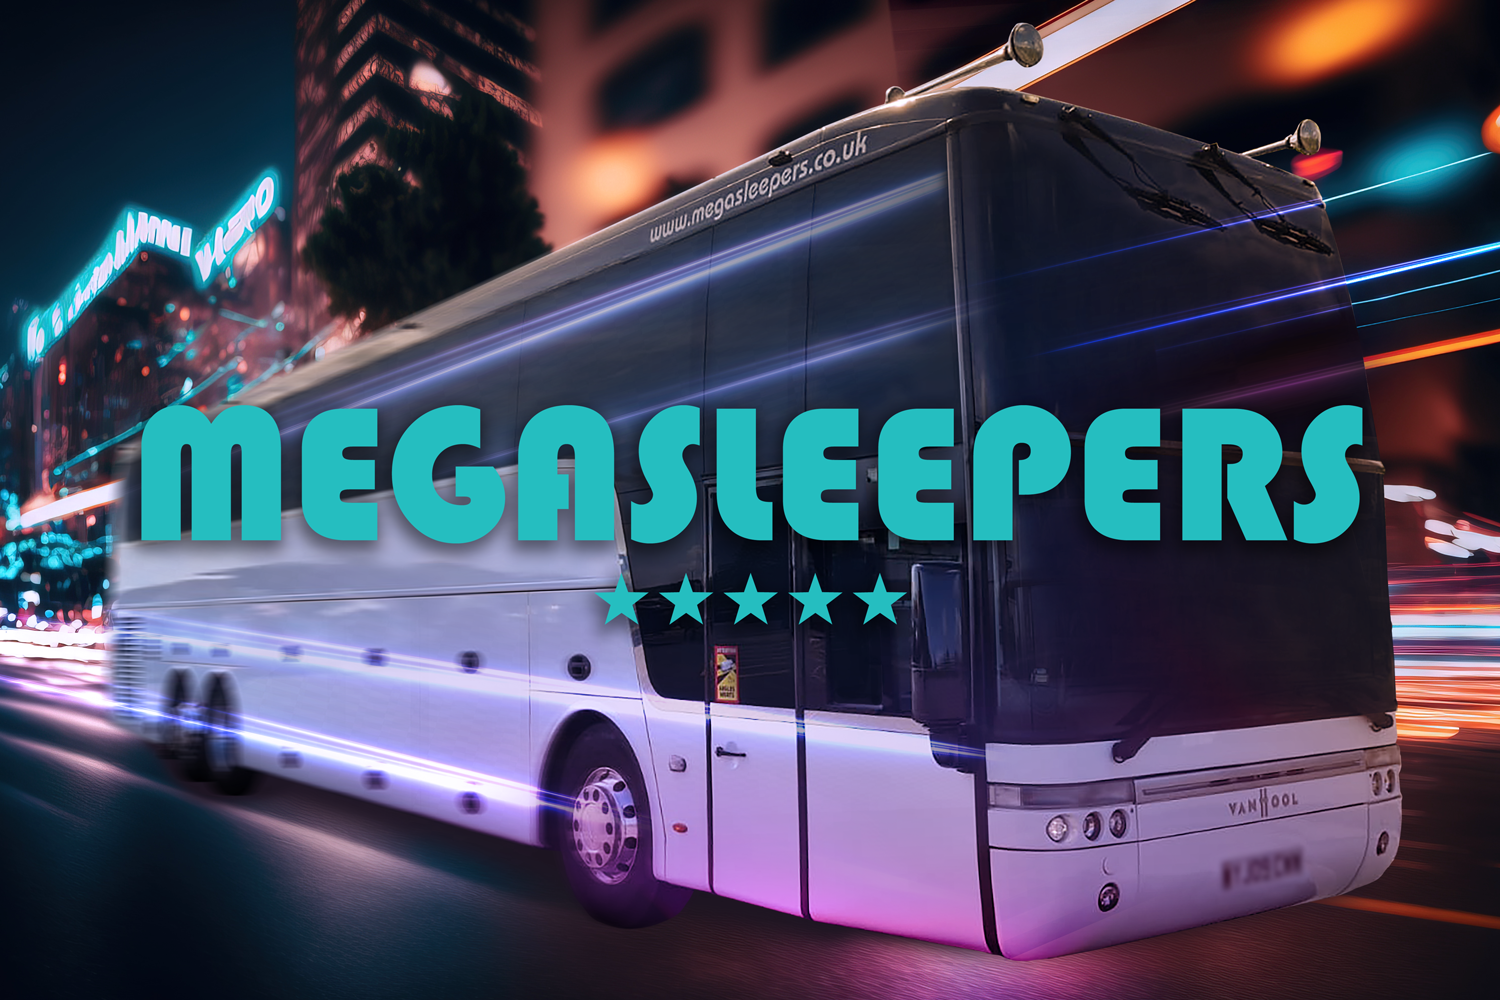 Megasleepers bus image. Hire a sleeper bus